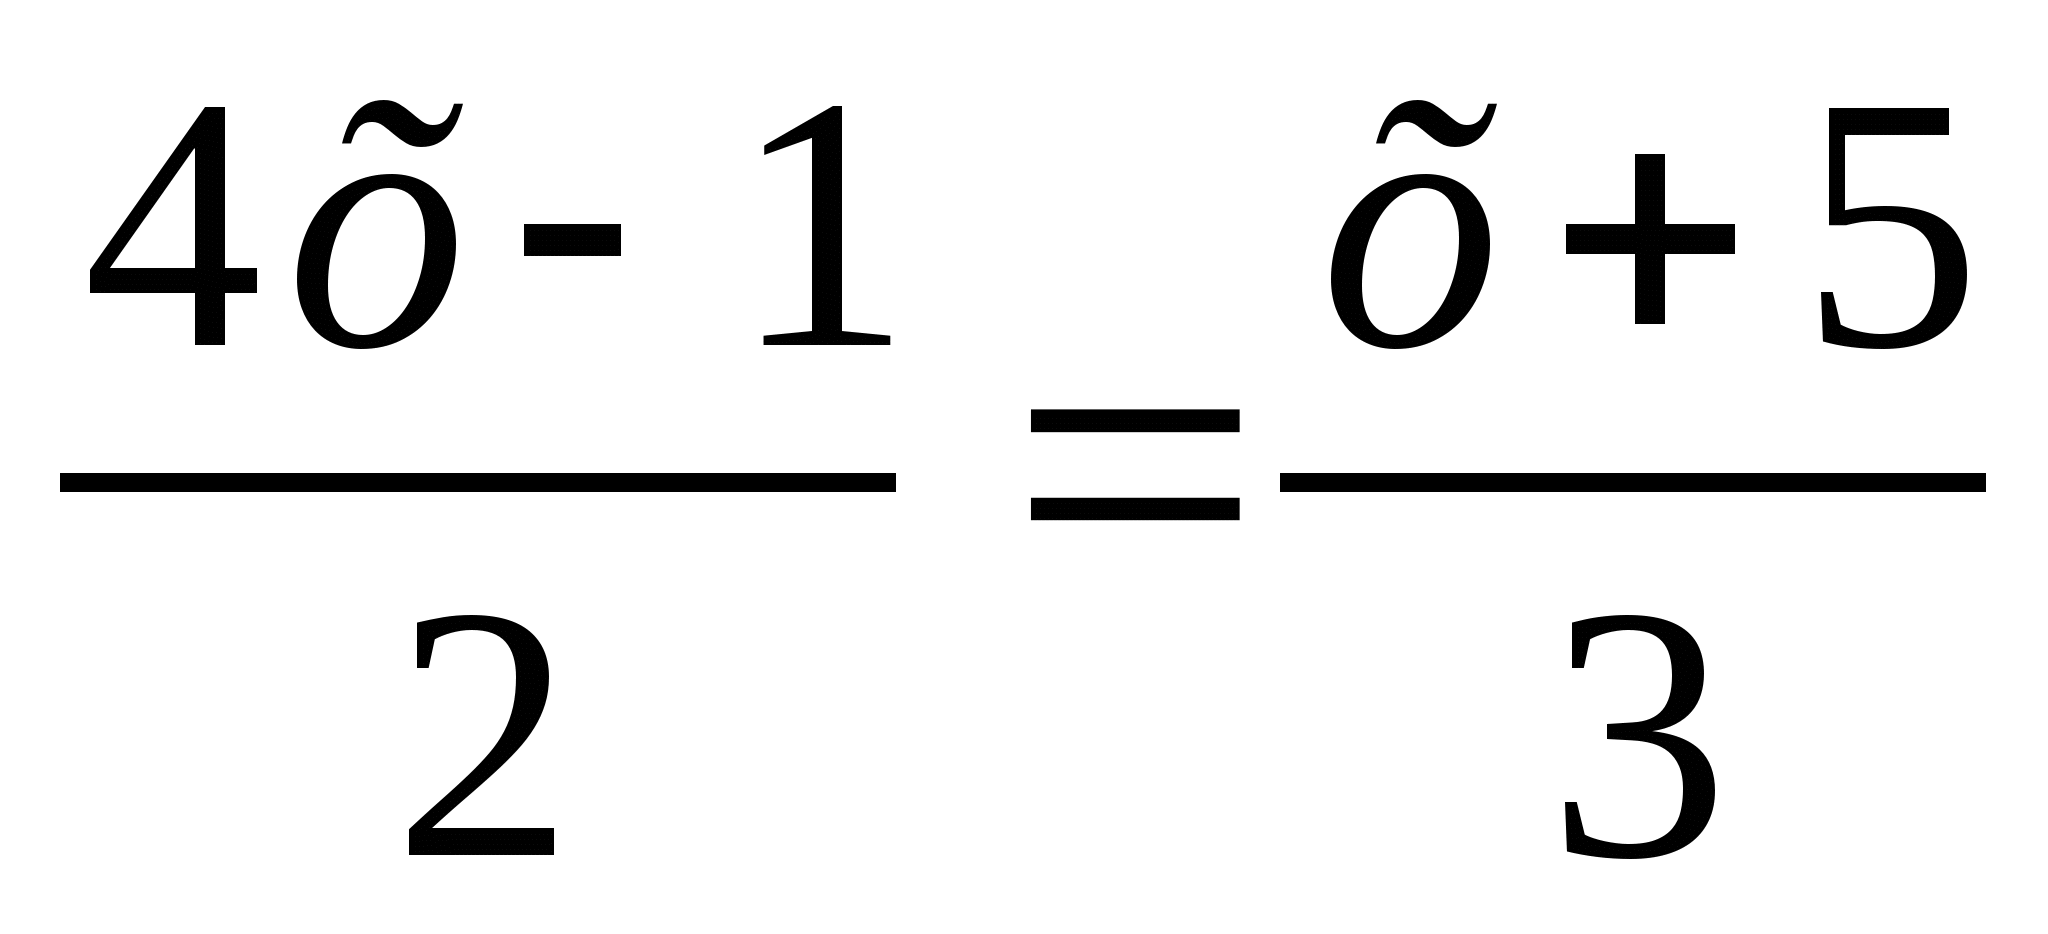 Тест по теме Решение уравнений